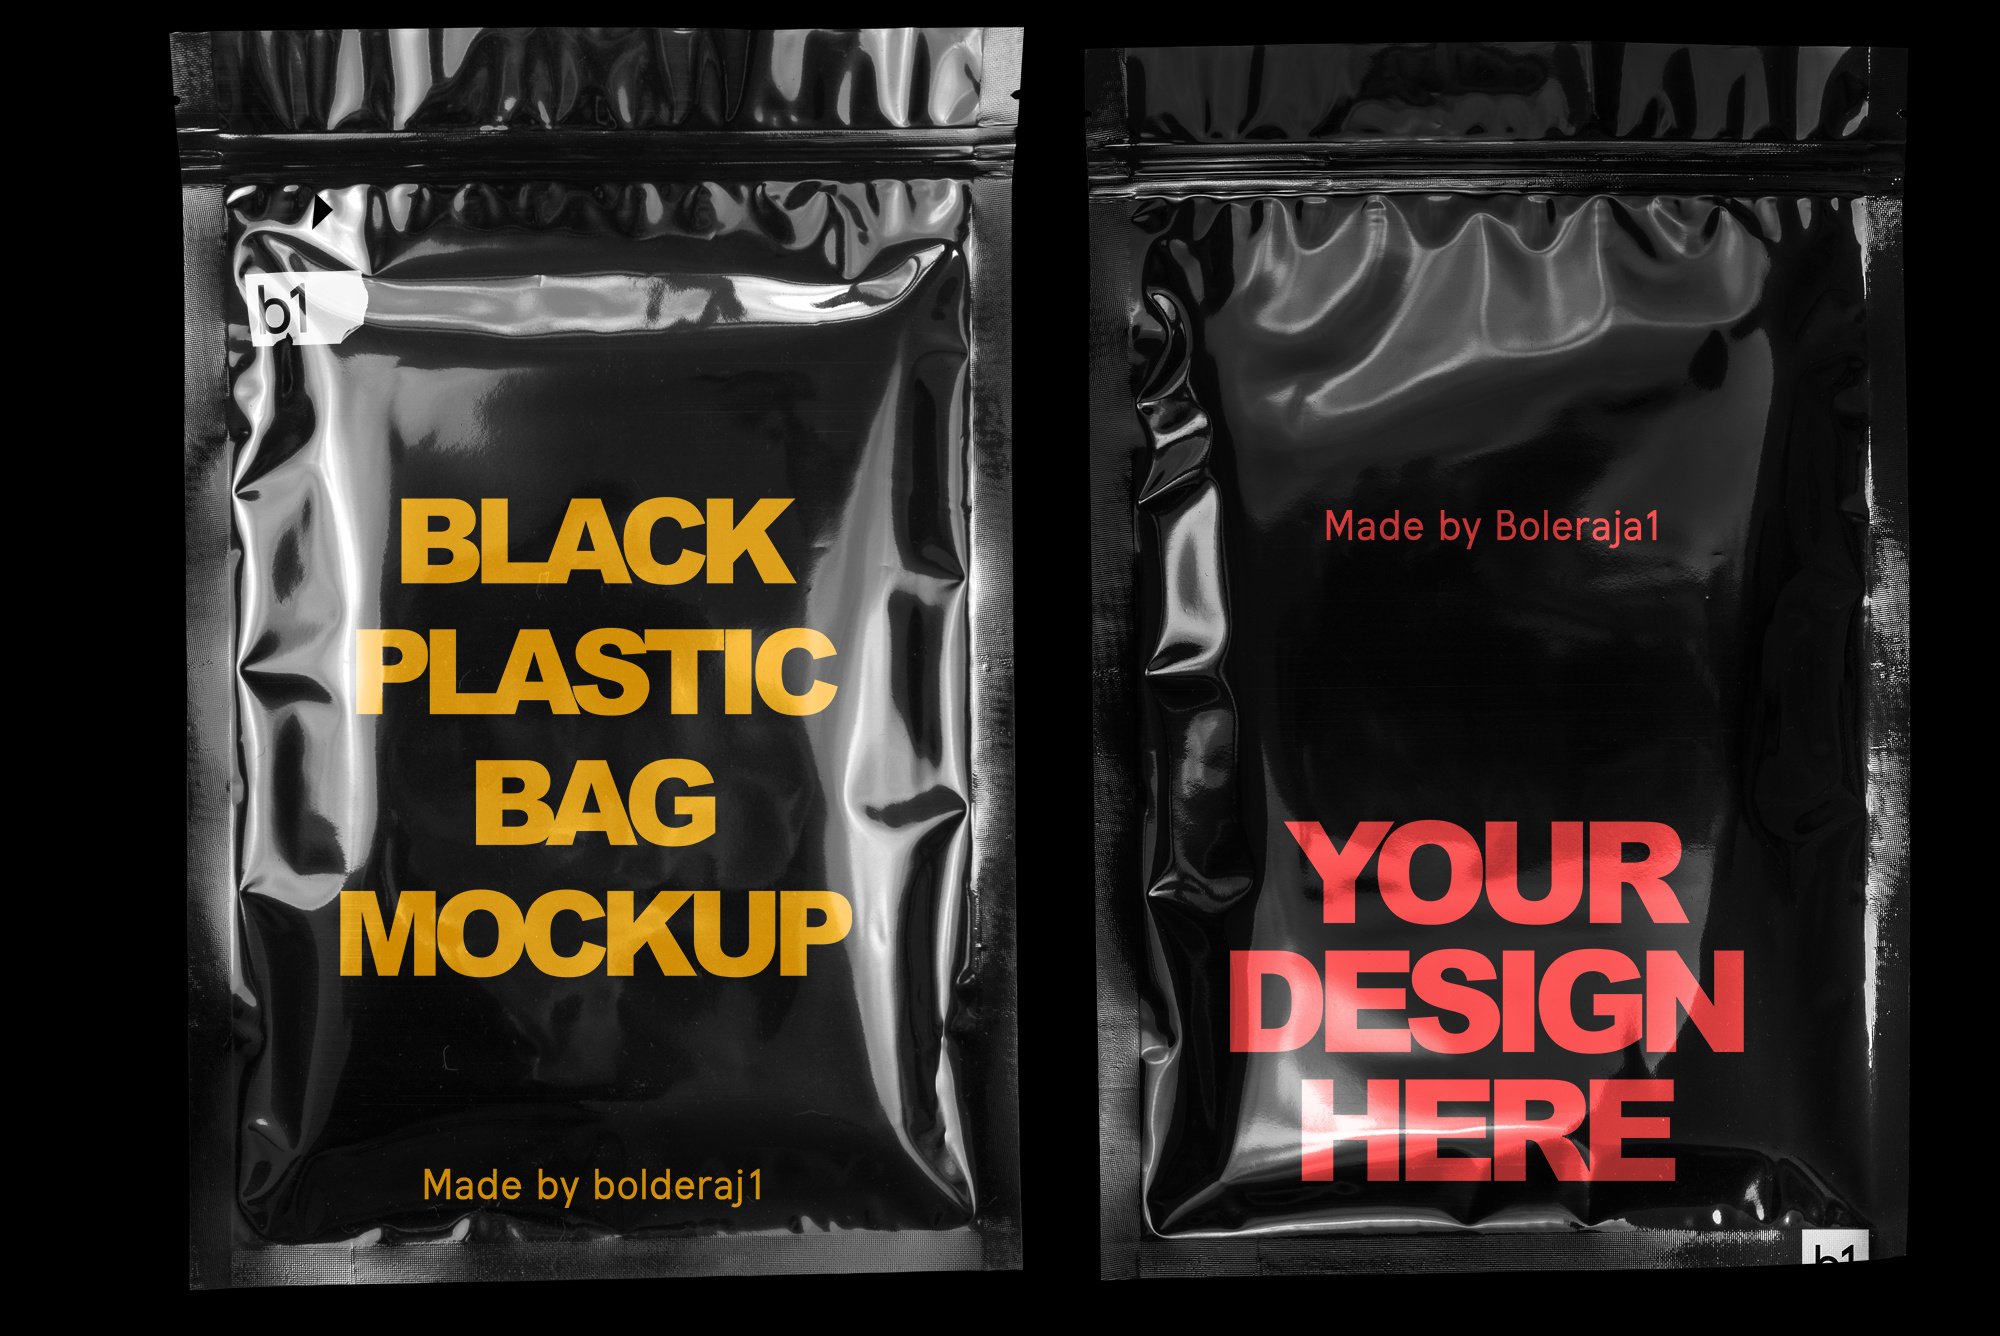 Black plastic bag mockup preview image.